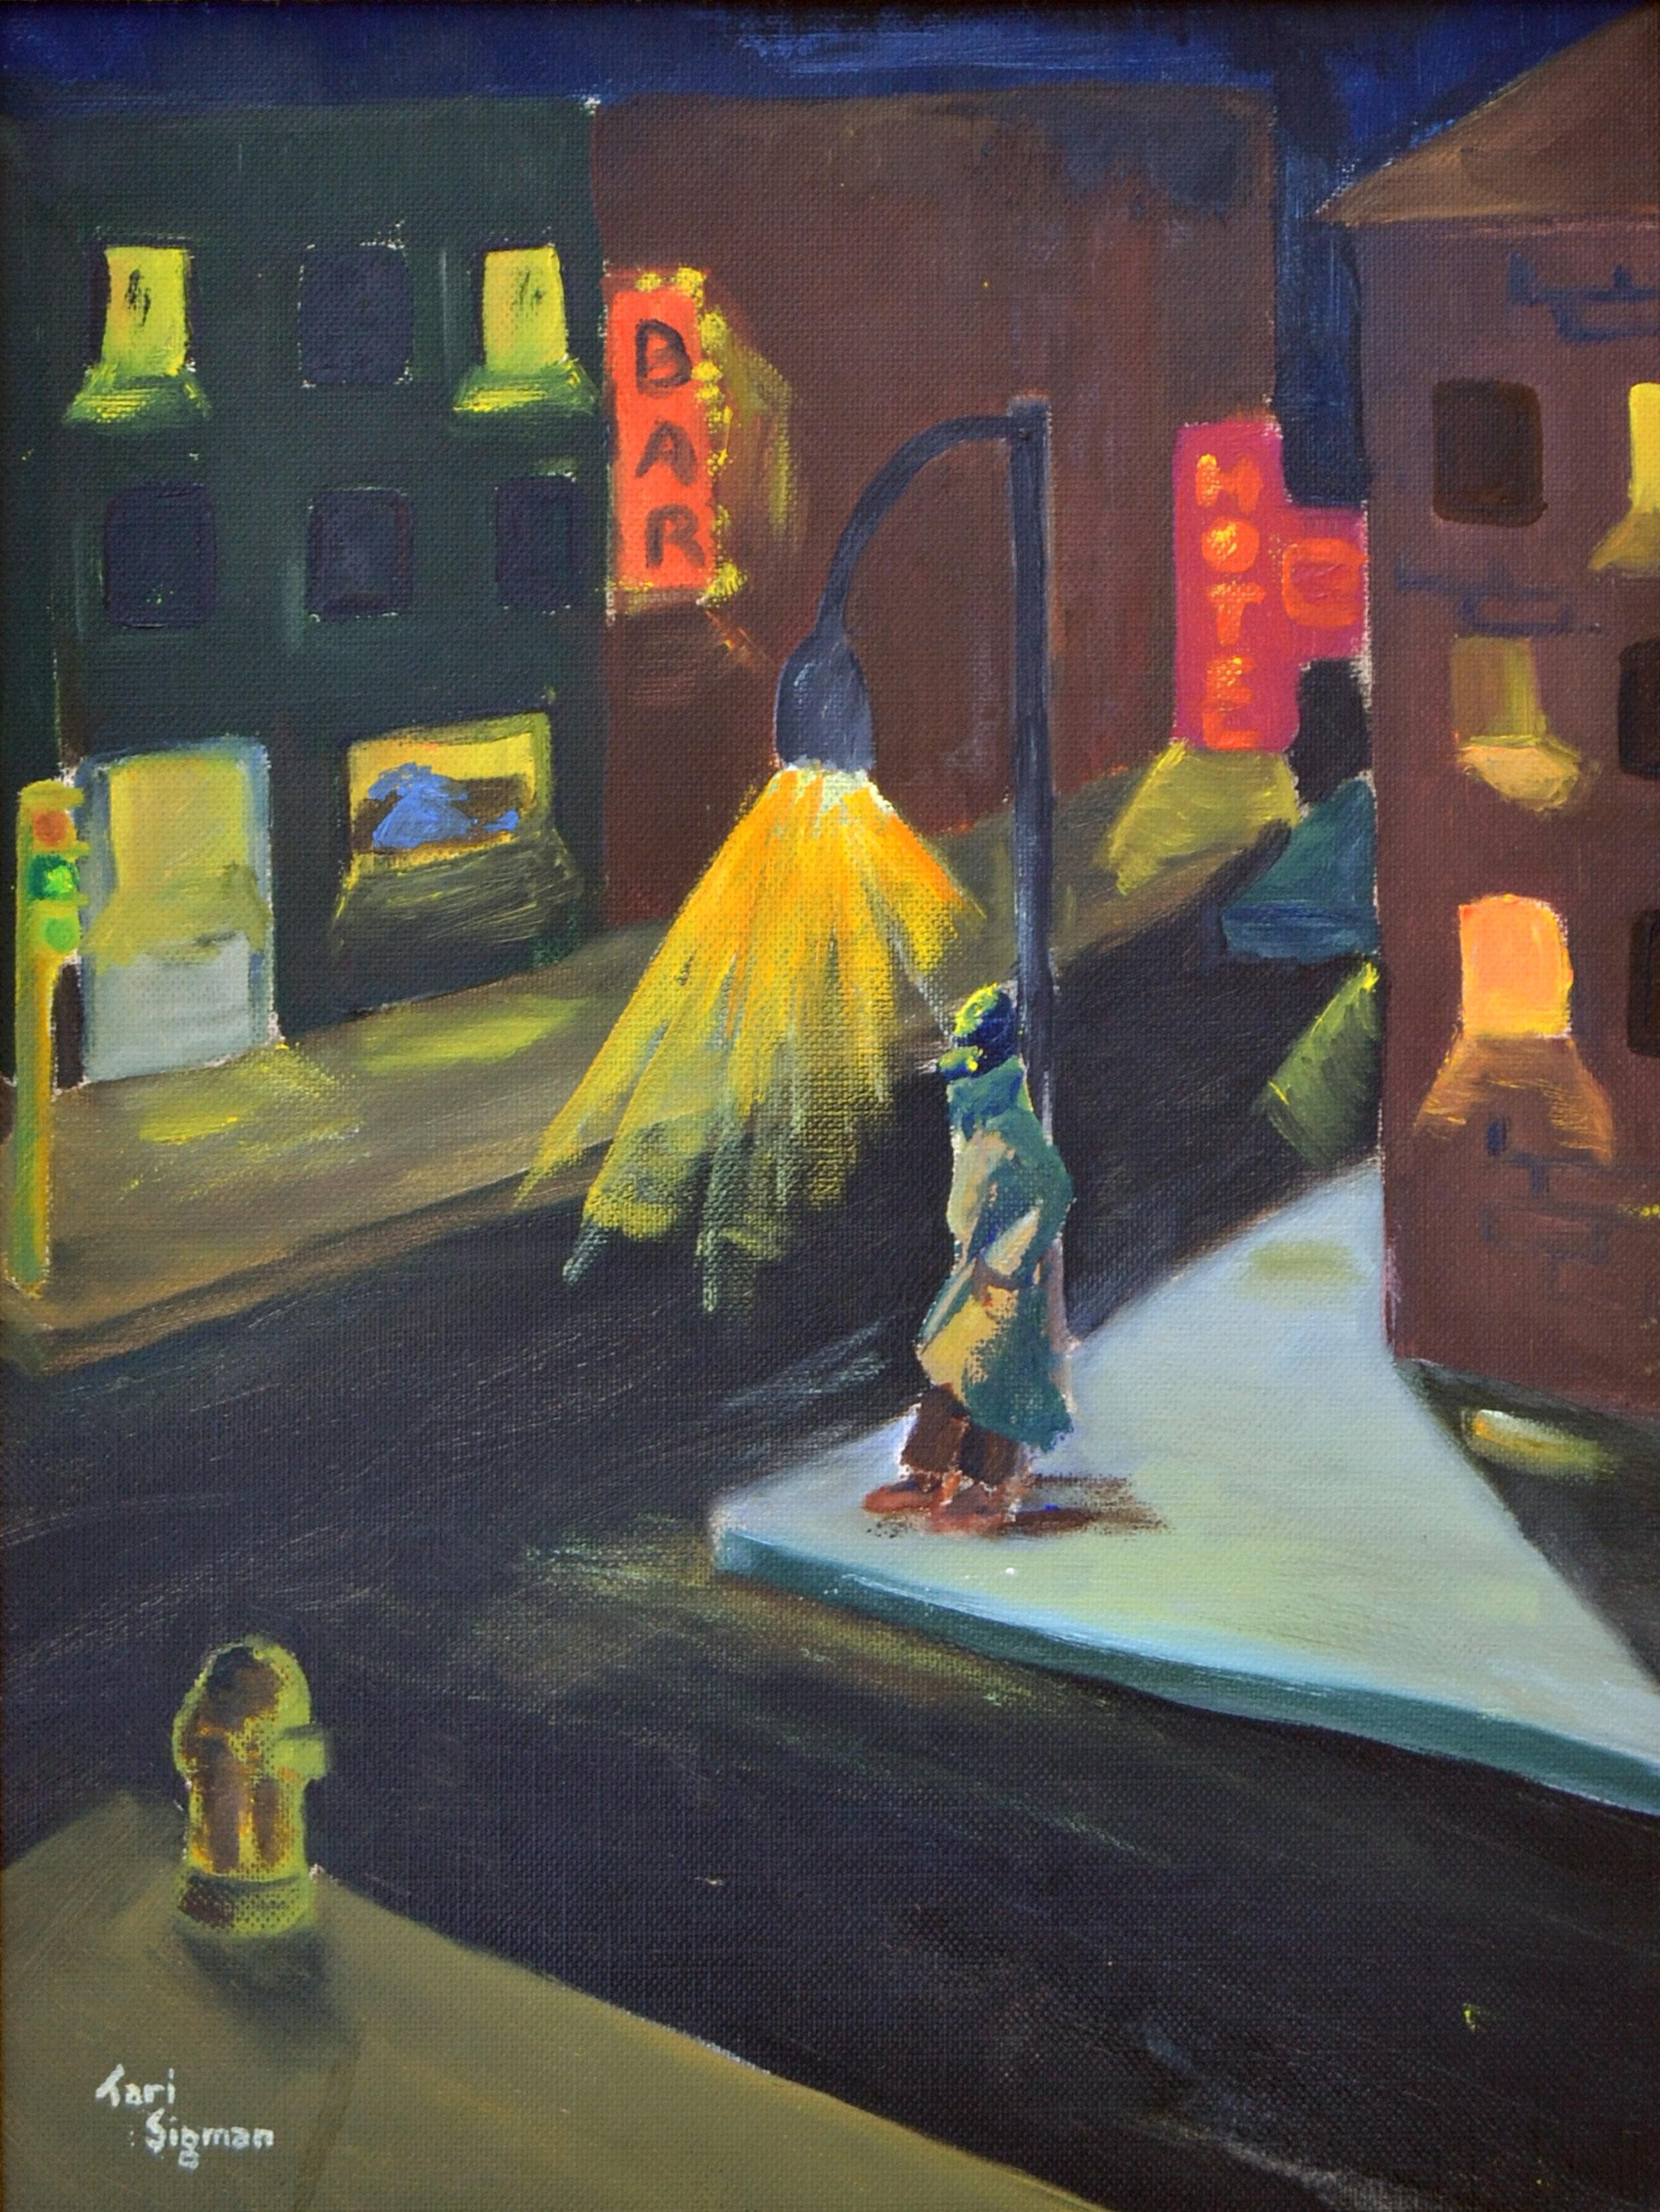 Tari Sigman Bowman Landscape Painting - Bay Area Nocturnal Urban Landscape with Figure 